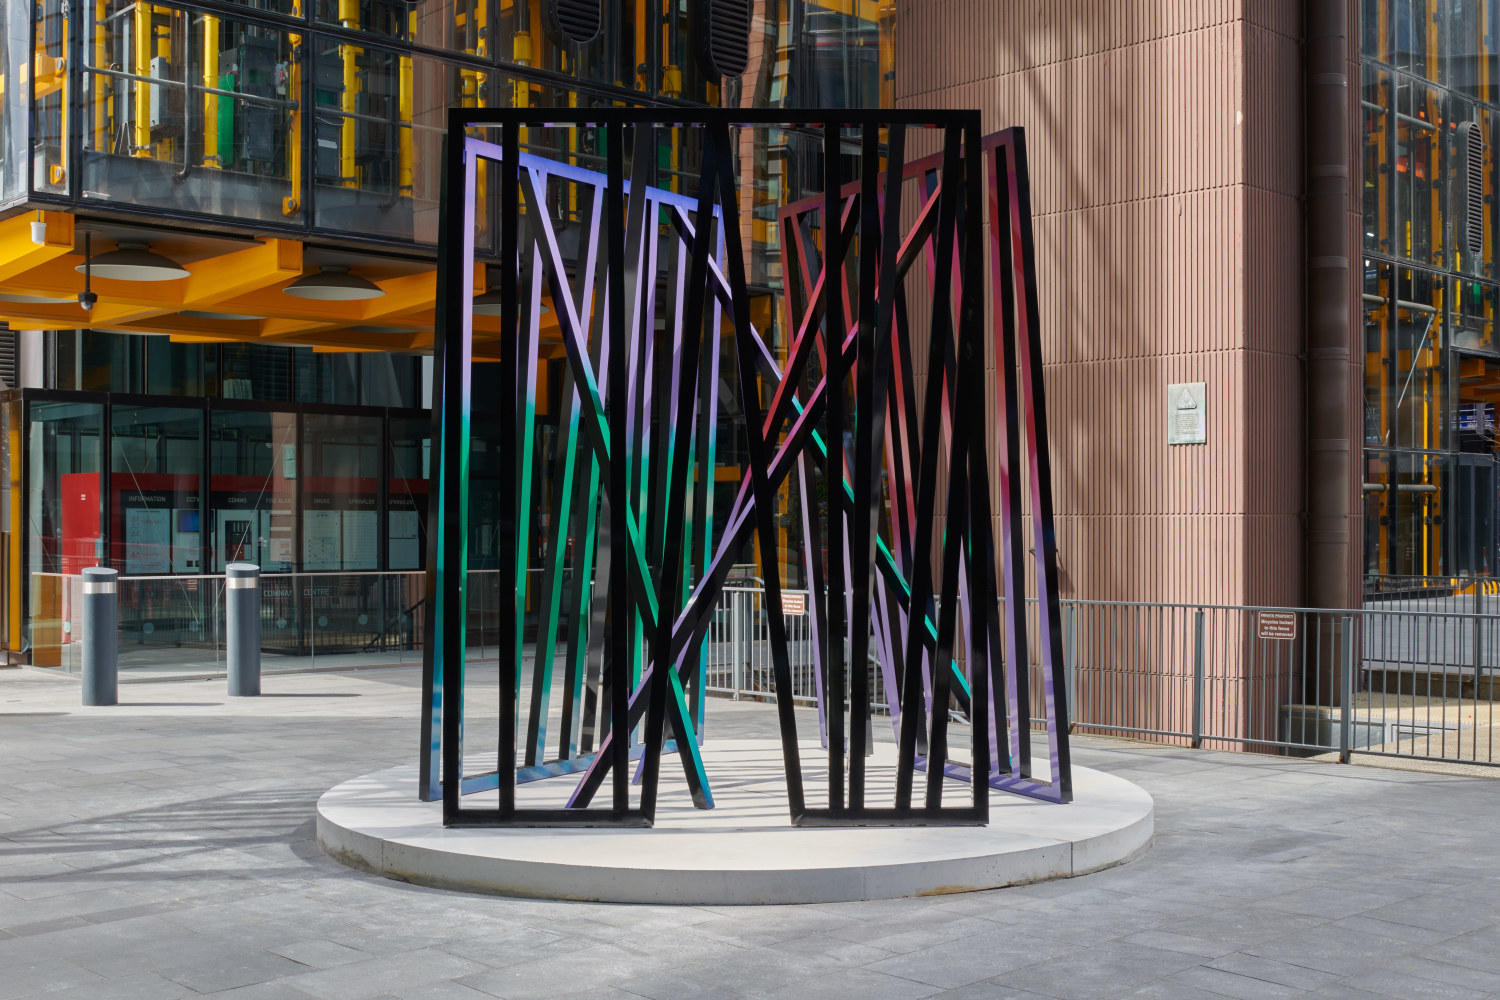 Eva Rothschild

Cosmos

2018

Spray painted aluminum

137 7/8 x 145 3/4 x 133 7/8 inches (350 x 370 x 340 cm)

Installation view: Sculpture in the City, London, 2021. Photo:&amp;nbsp;Benjamin Westoby

&amp;nbsp;